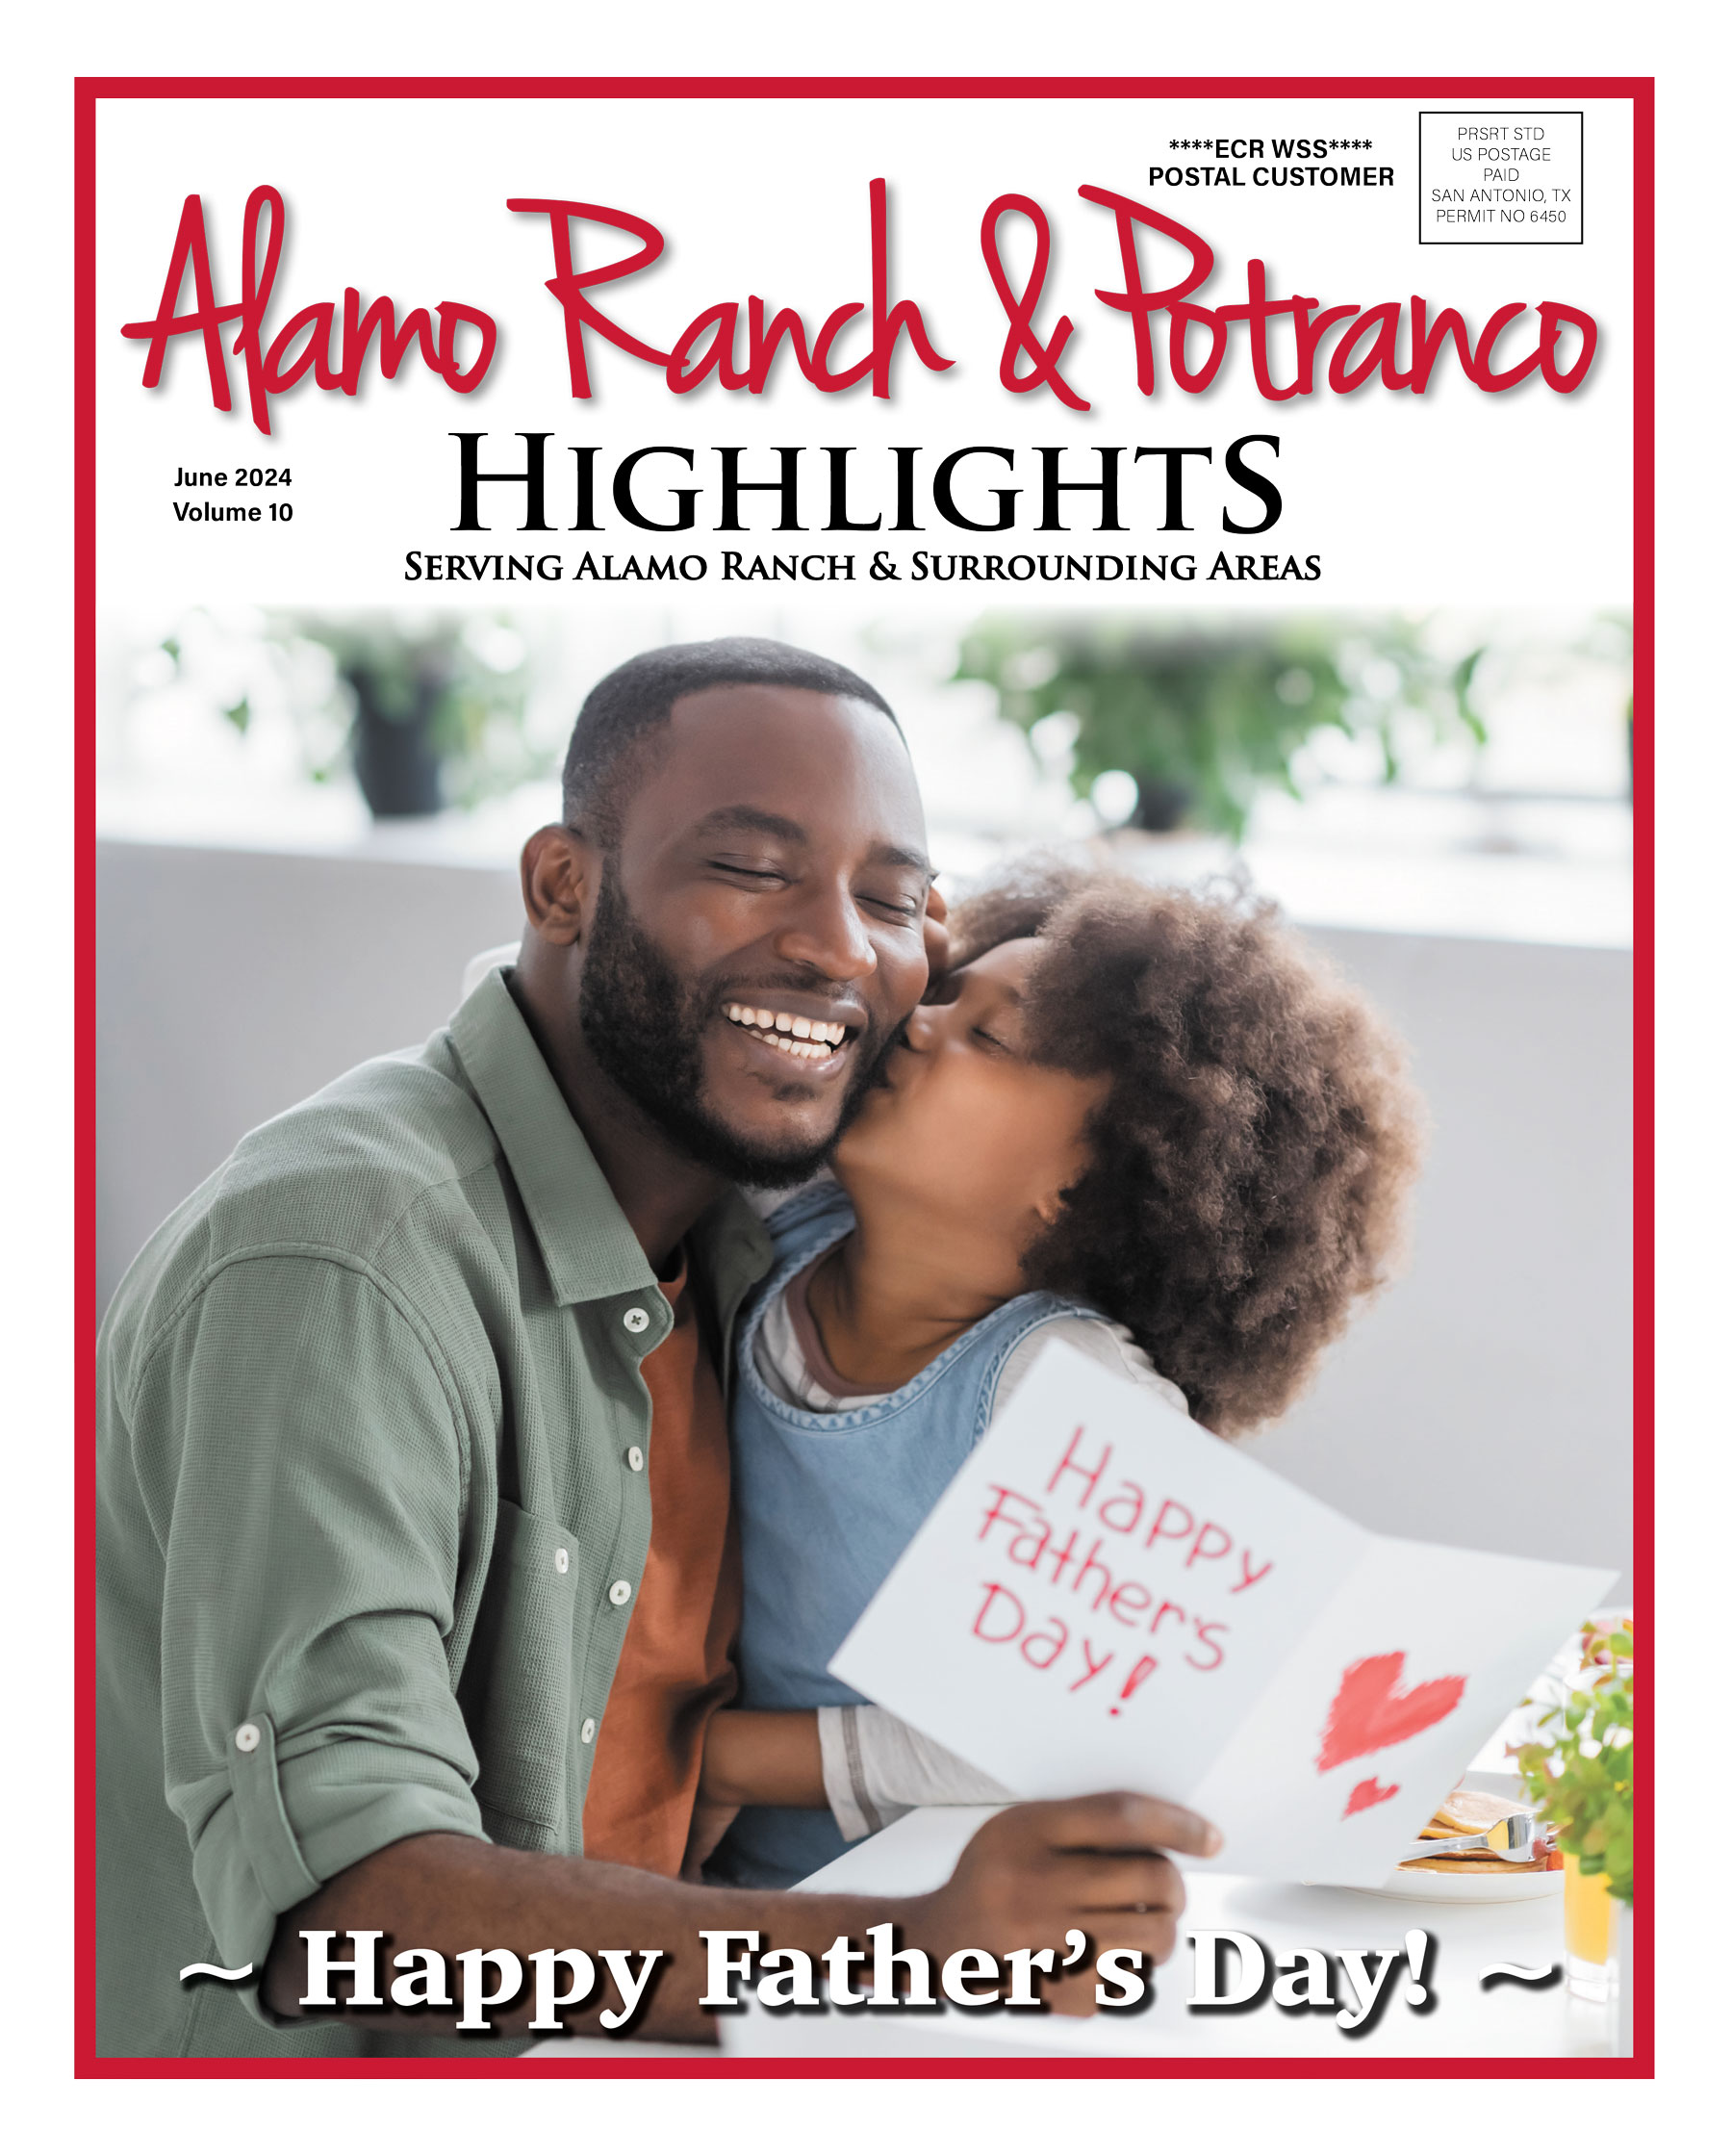 Alamo ranch Highlights June 2024